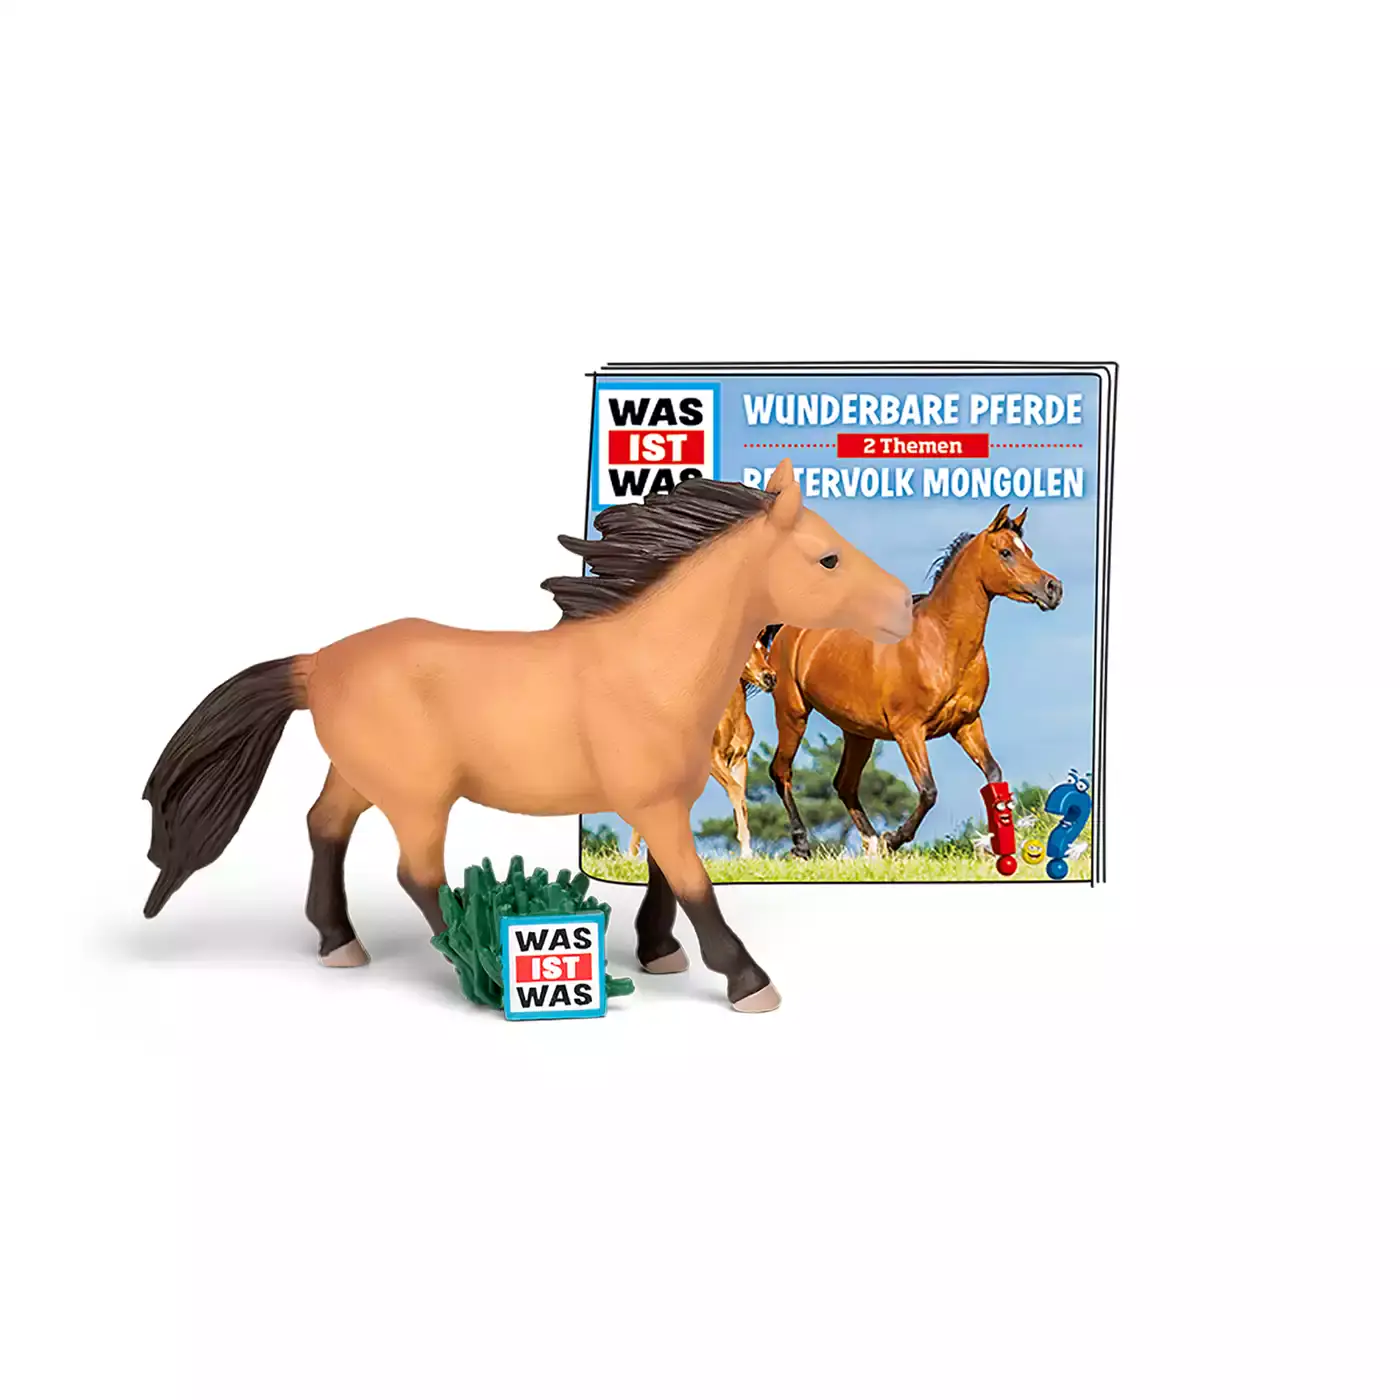 WAS IST WAS - Wunderbare Pferde/Reitervolk Mongolen tonies 2000576033103 1